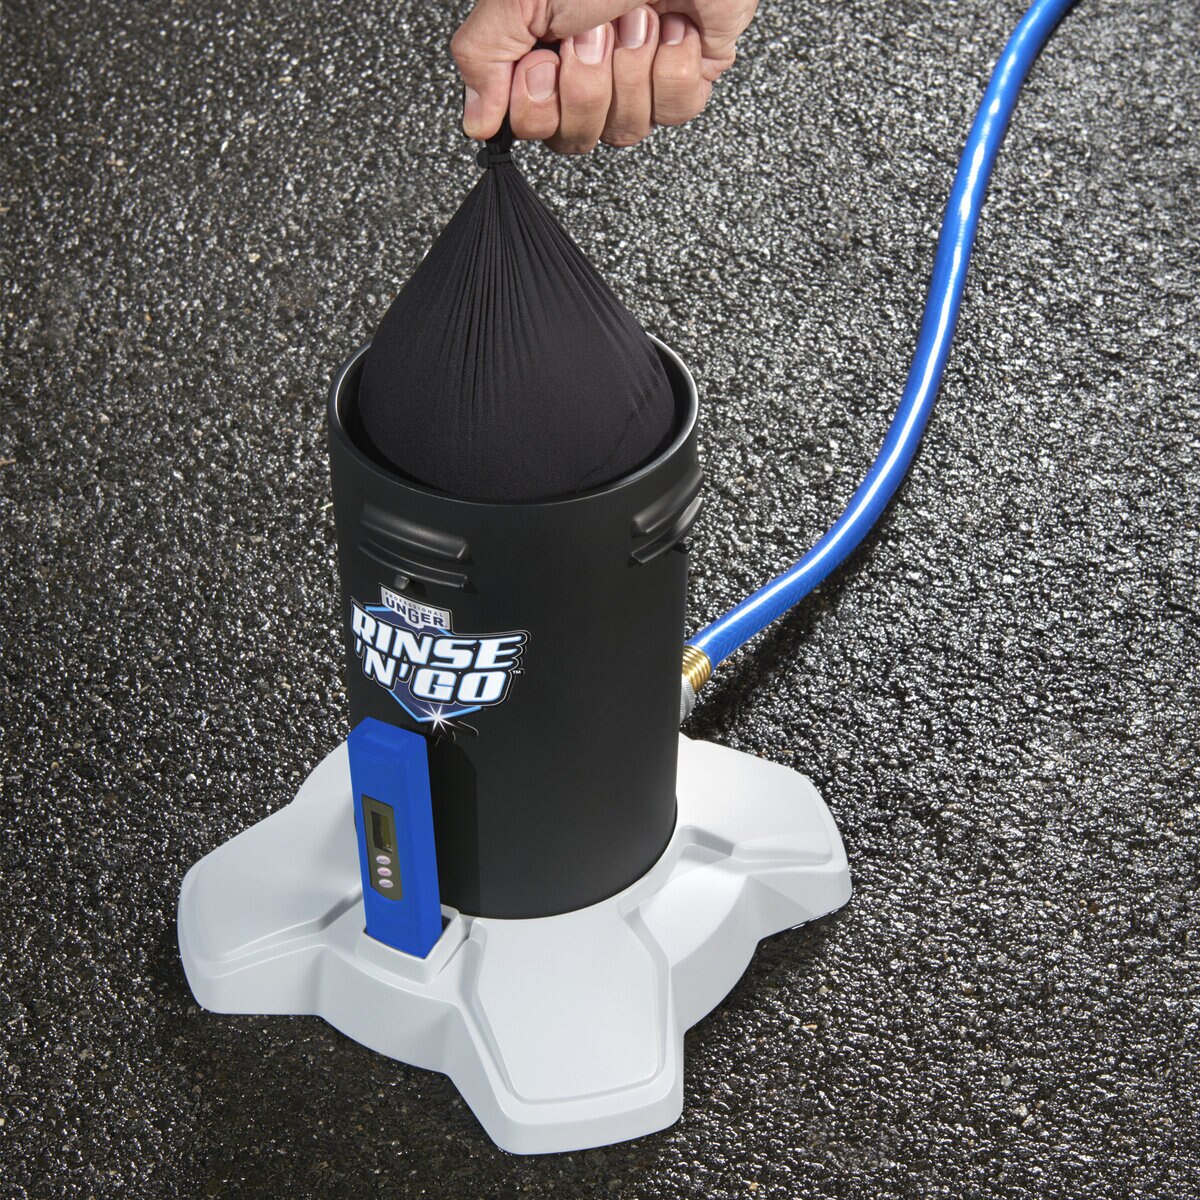 Unger Rinse'n'Go 洗車用純水器用 交換樹脂フィルター2個 | Costco Japan